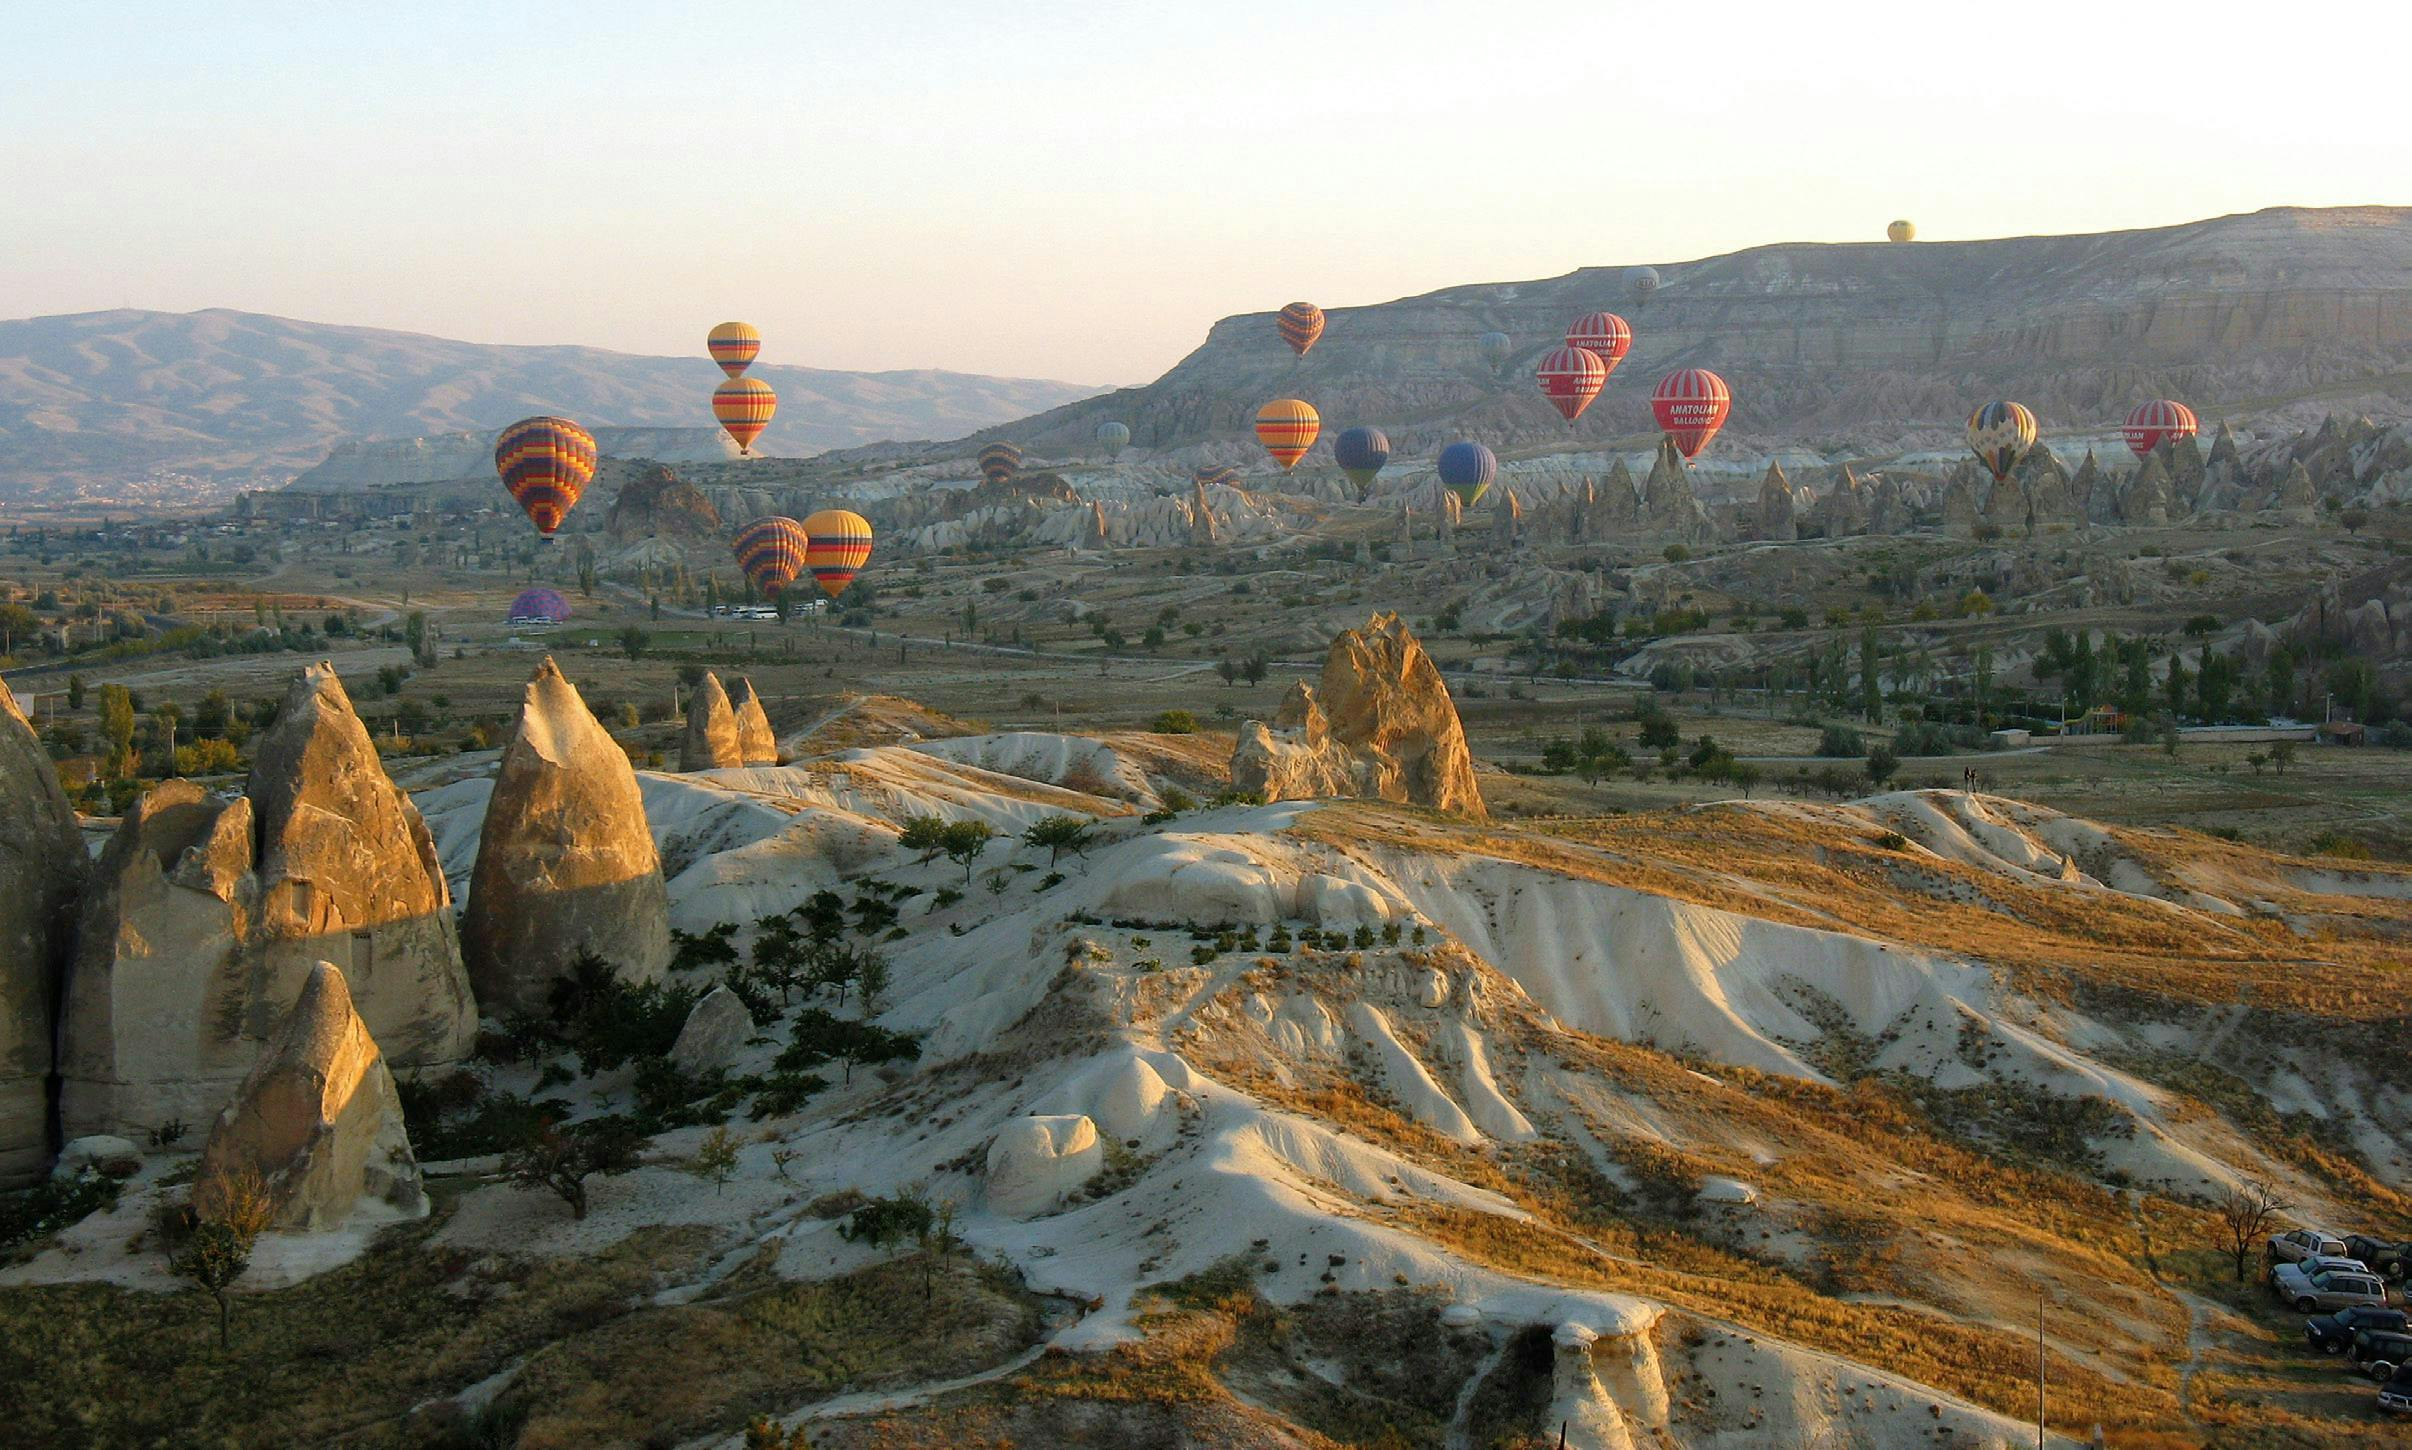 outdoors hot air balloon vehicle aircraft transportation nature landscape scenery ball wilderness